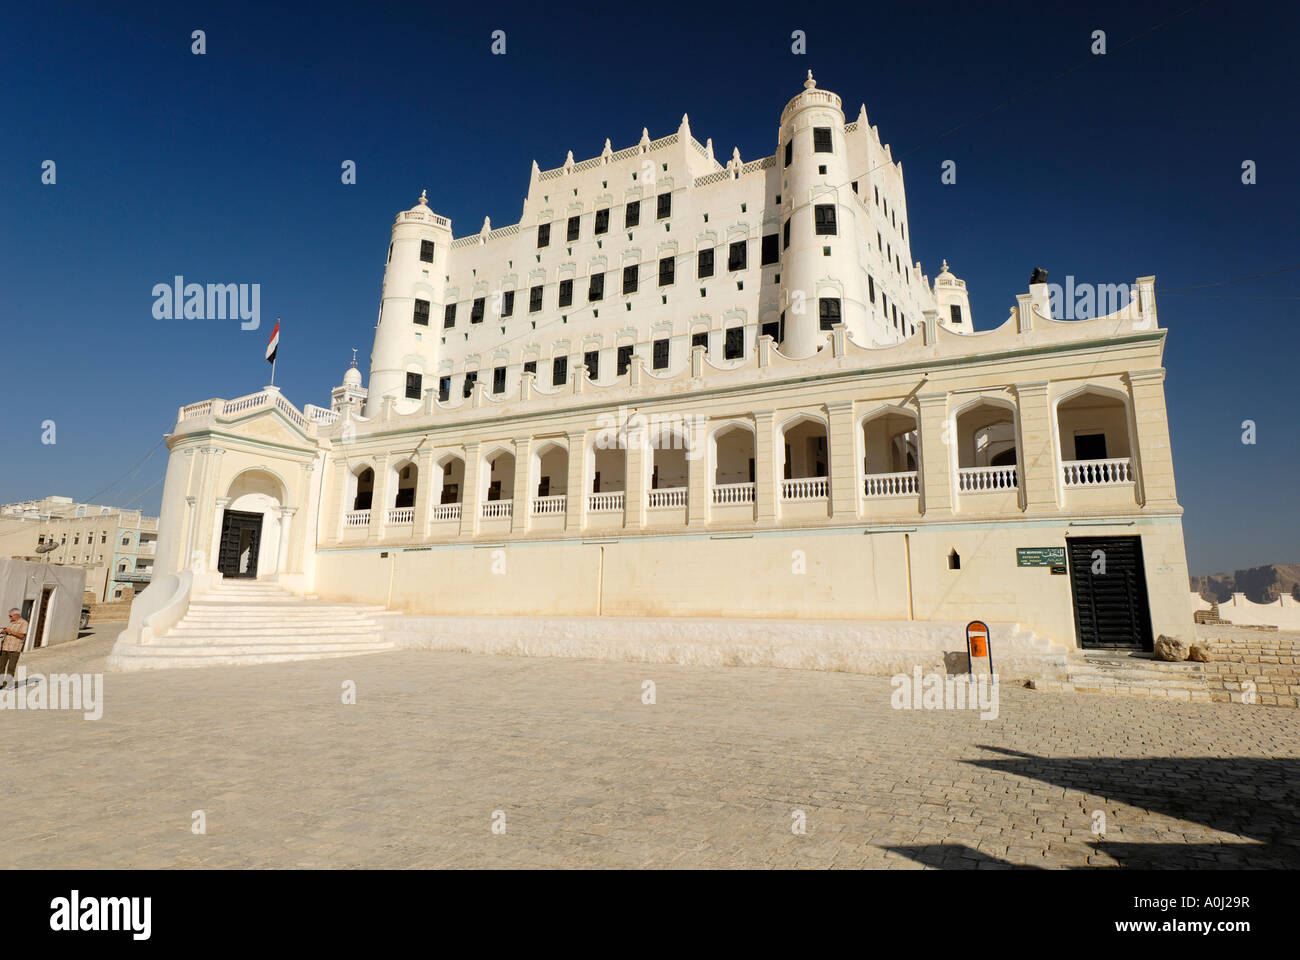 Palace of the sultan, Sayun, Wadi Hadramaut, Yemen Stock Photo